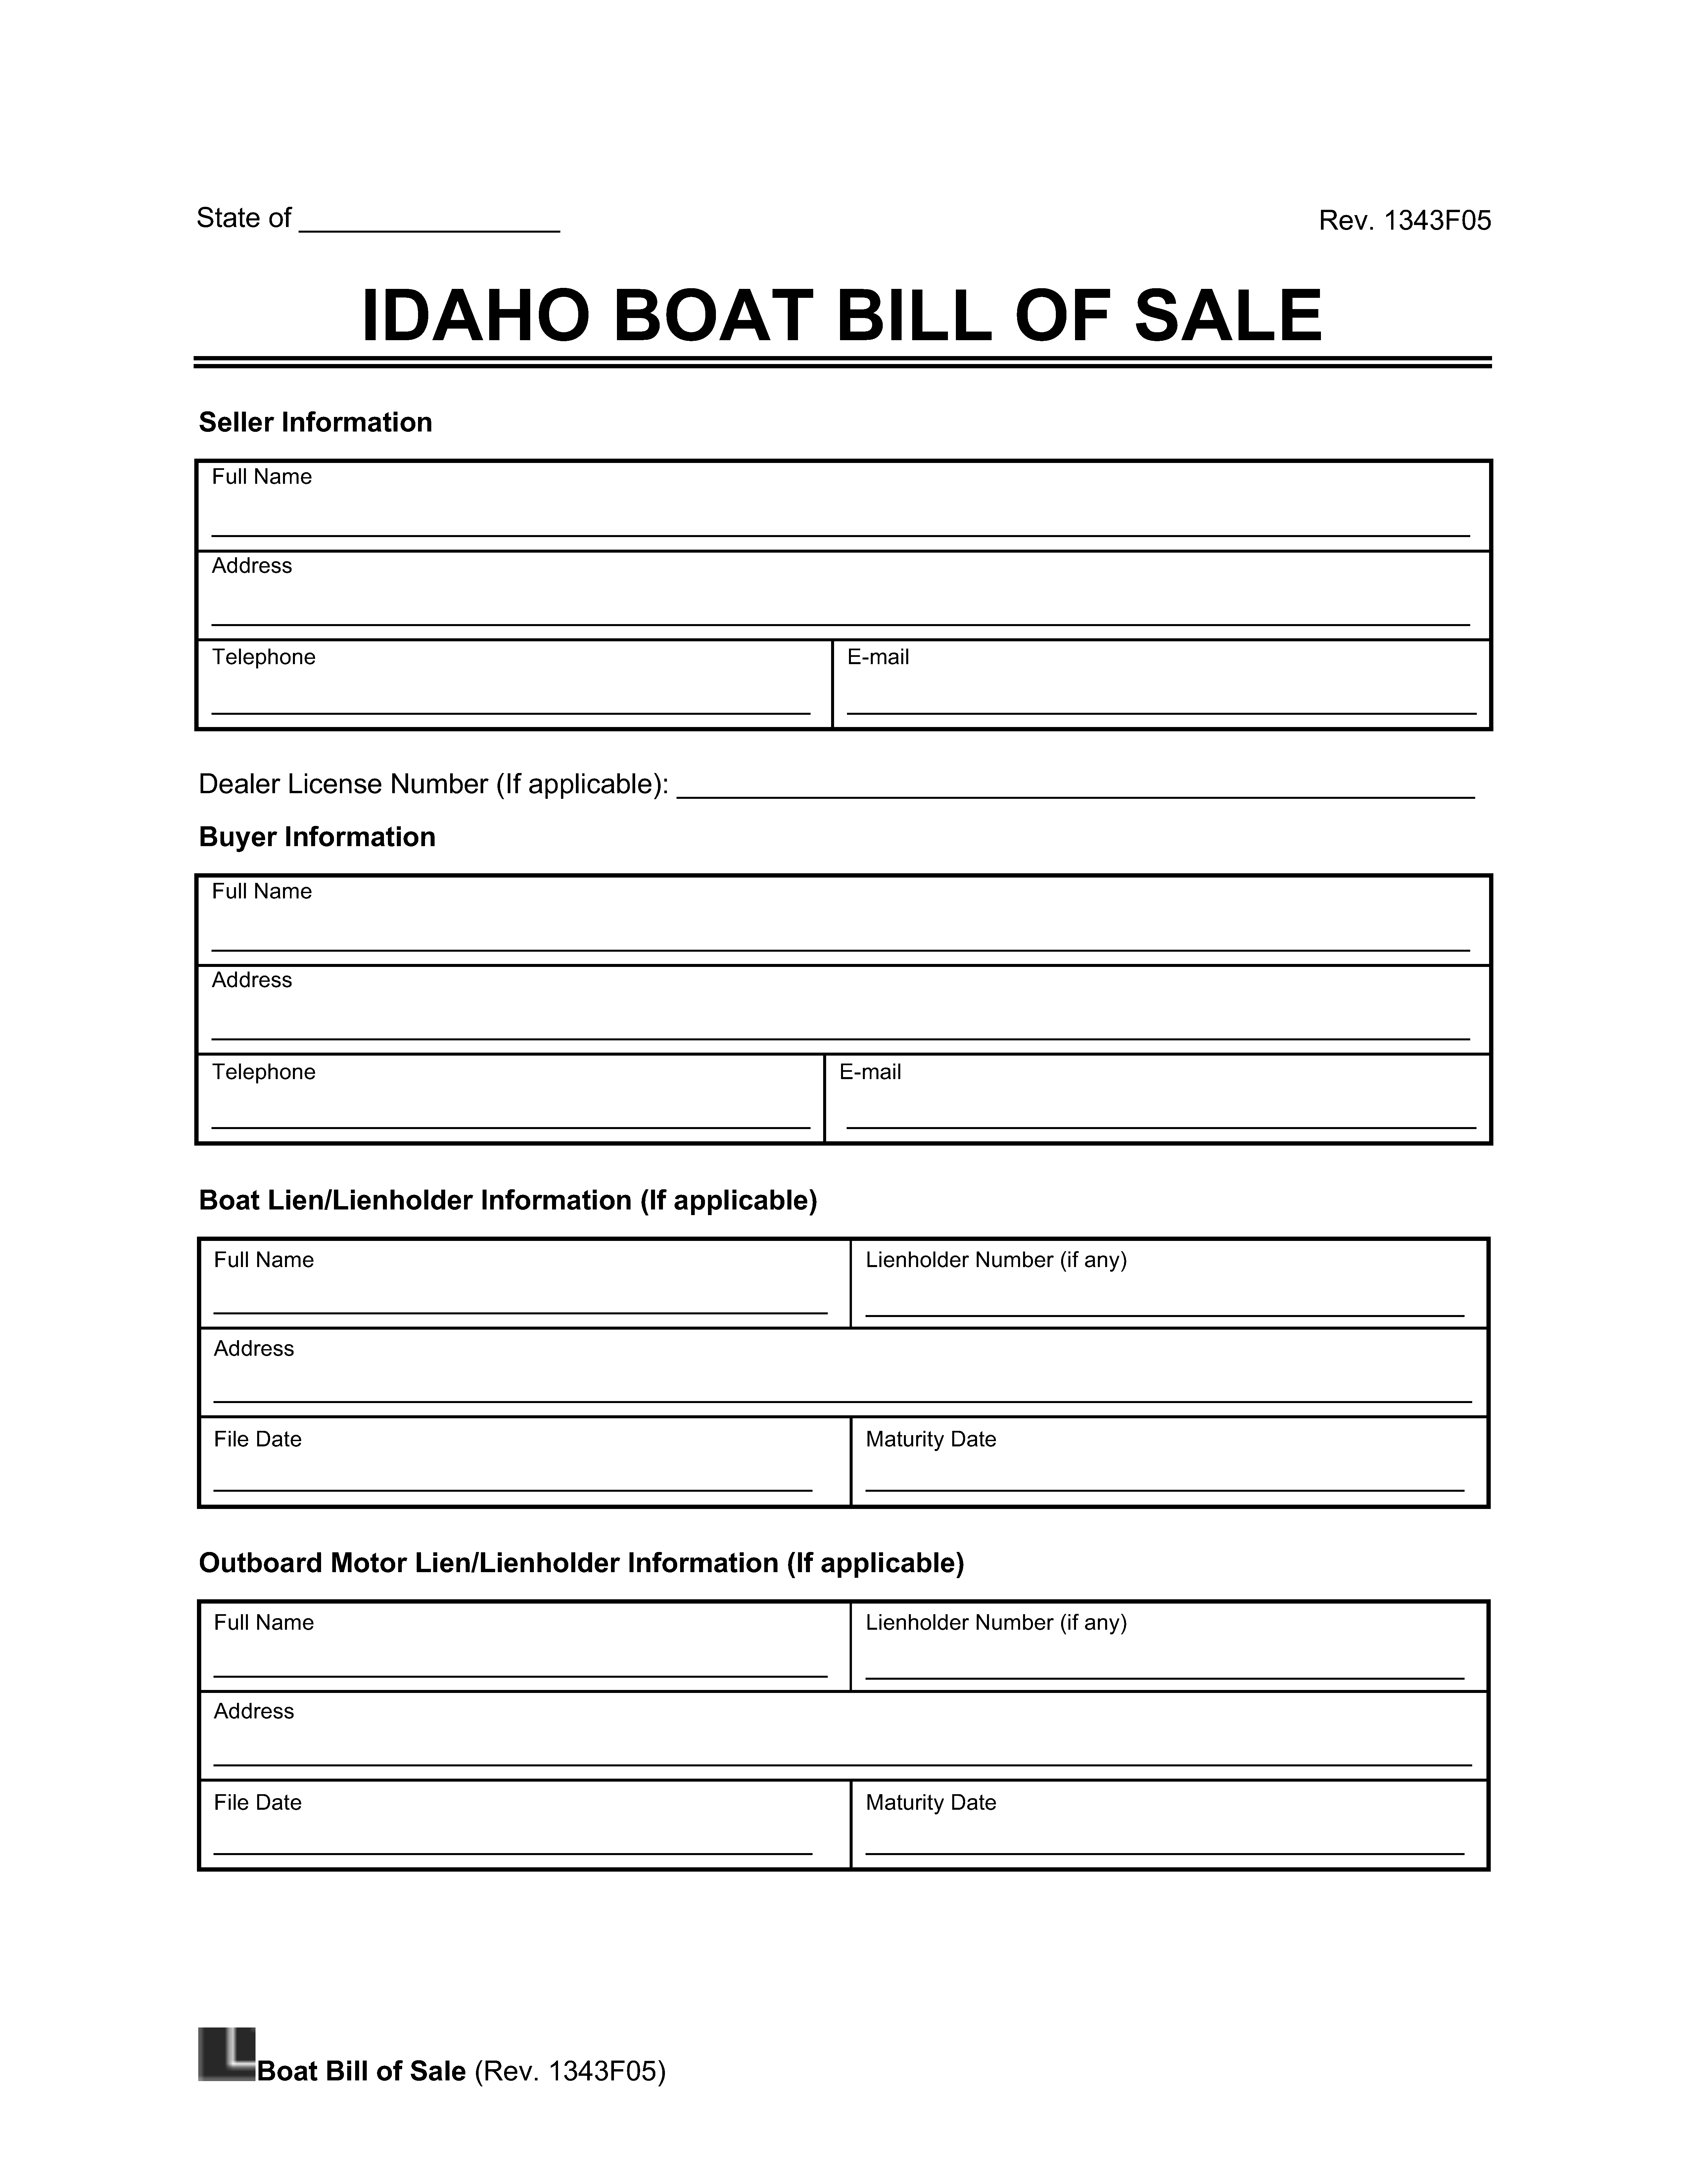 Idaho Boat Bill of Sale Template